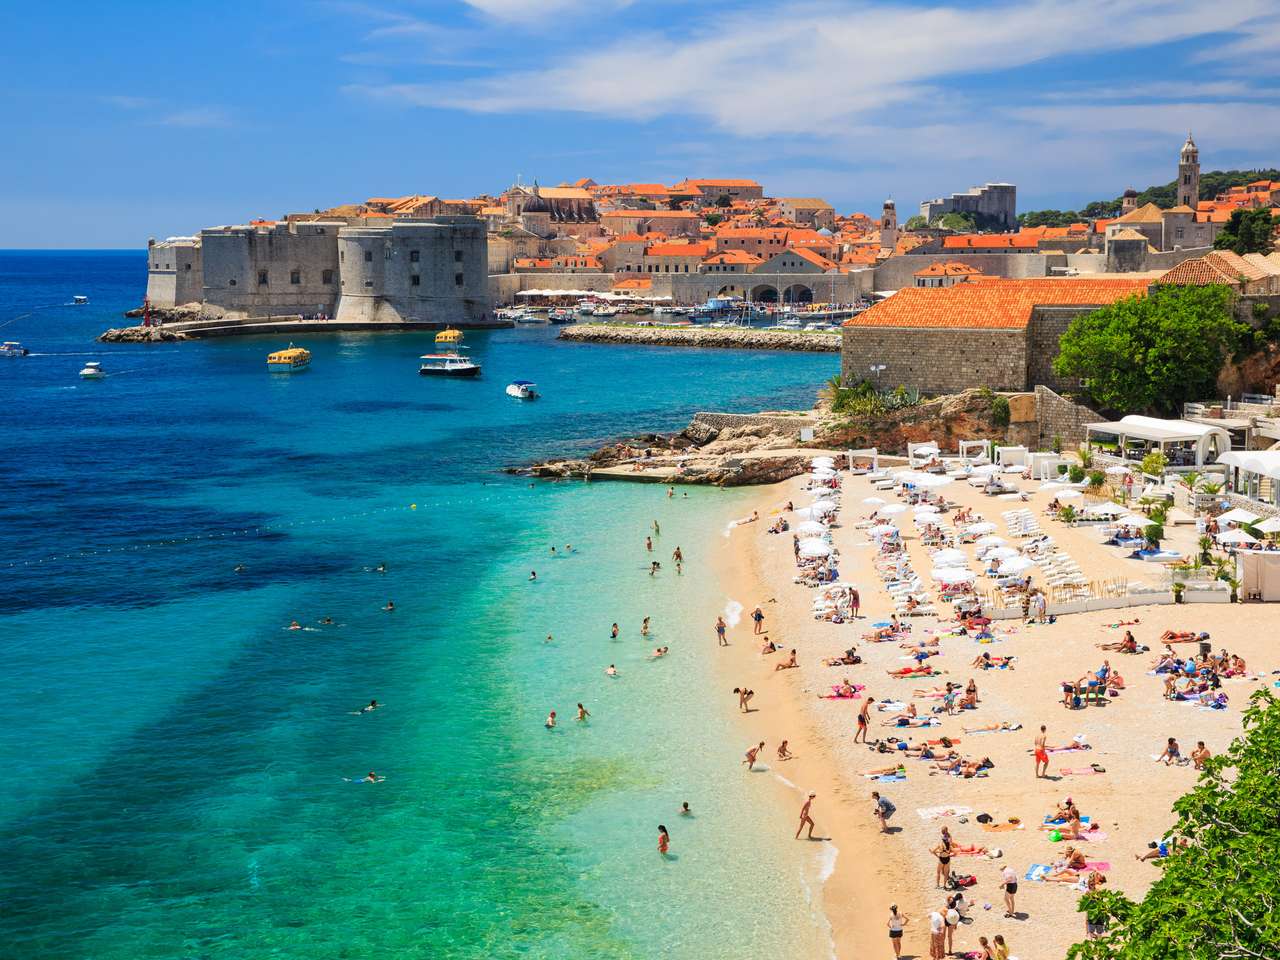 Stare miasto i plaża, Dubrownik Chorwacja puzzle online